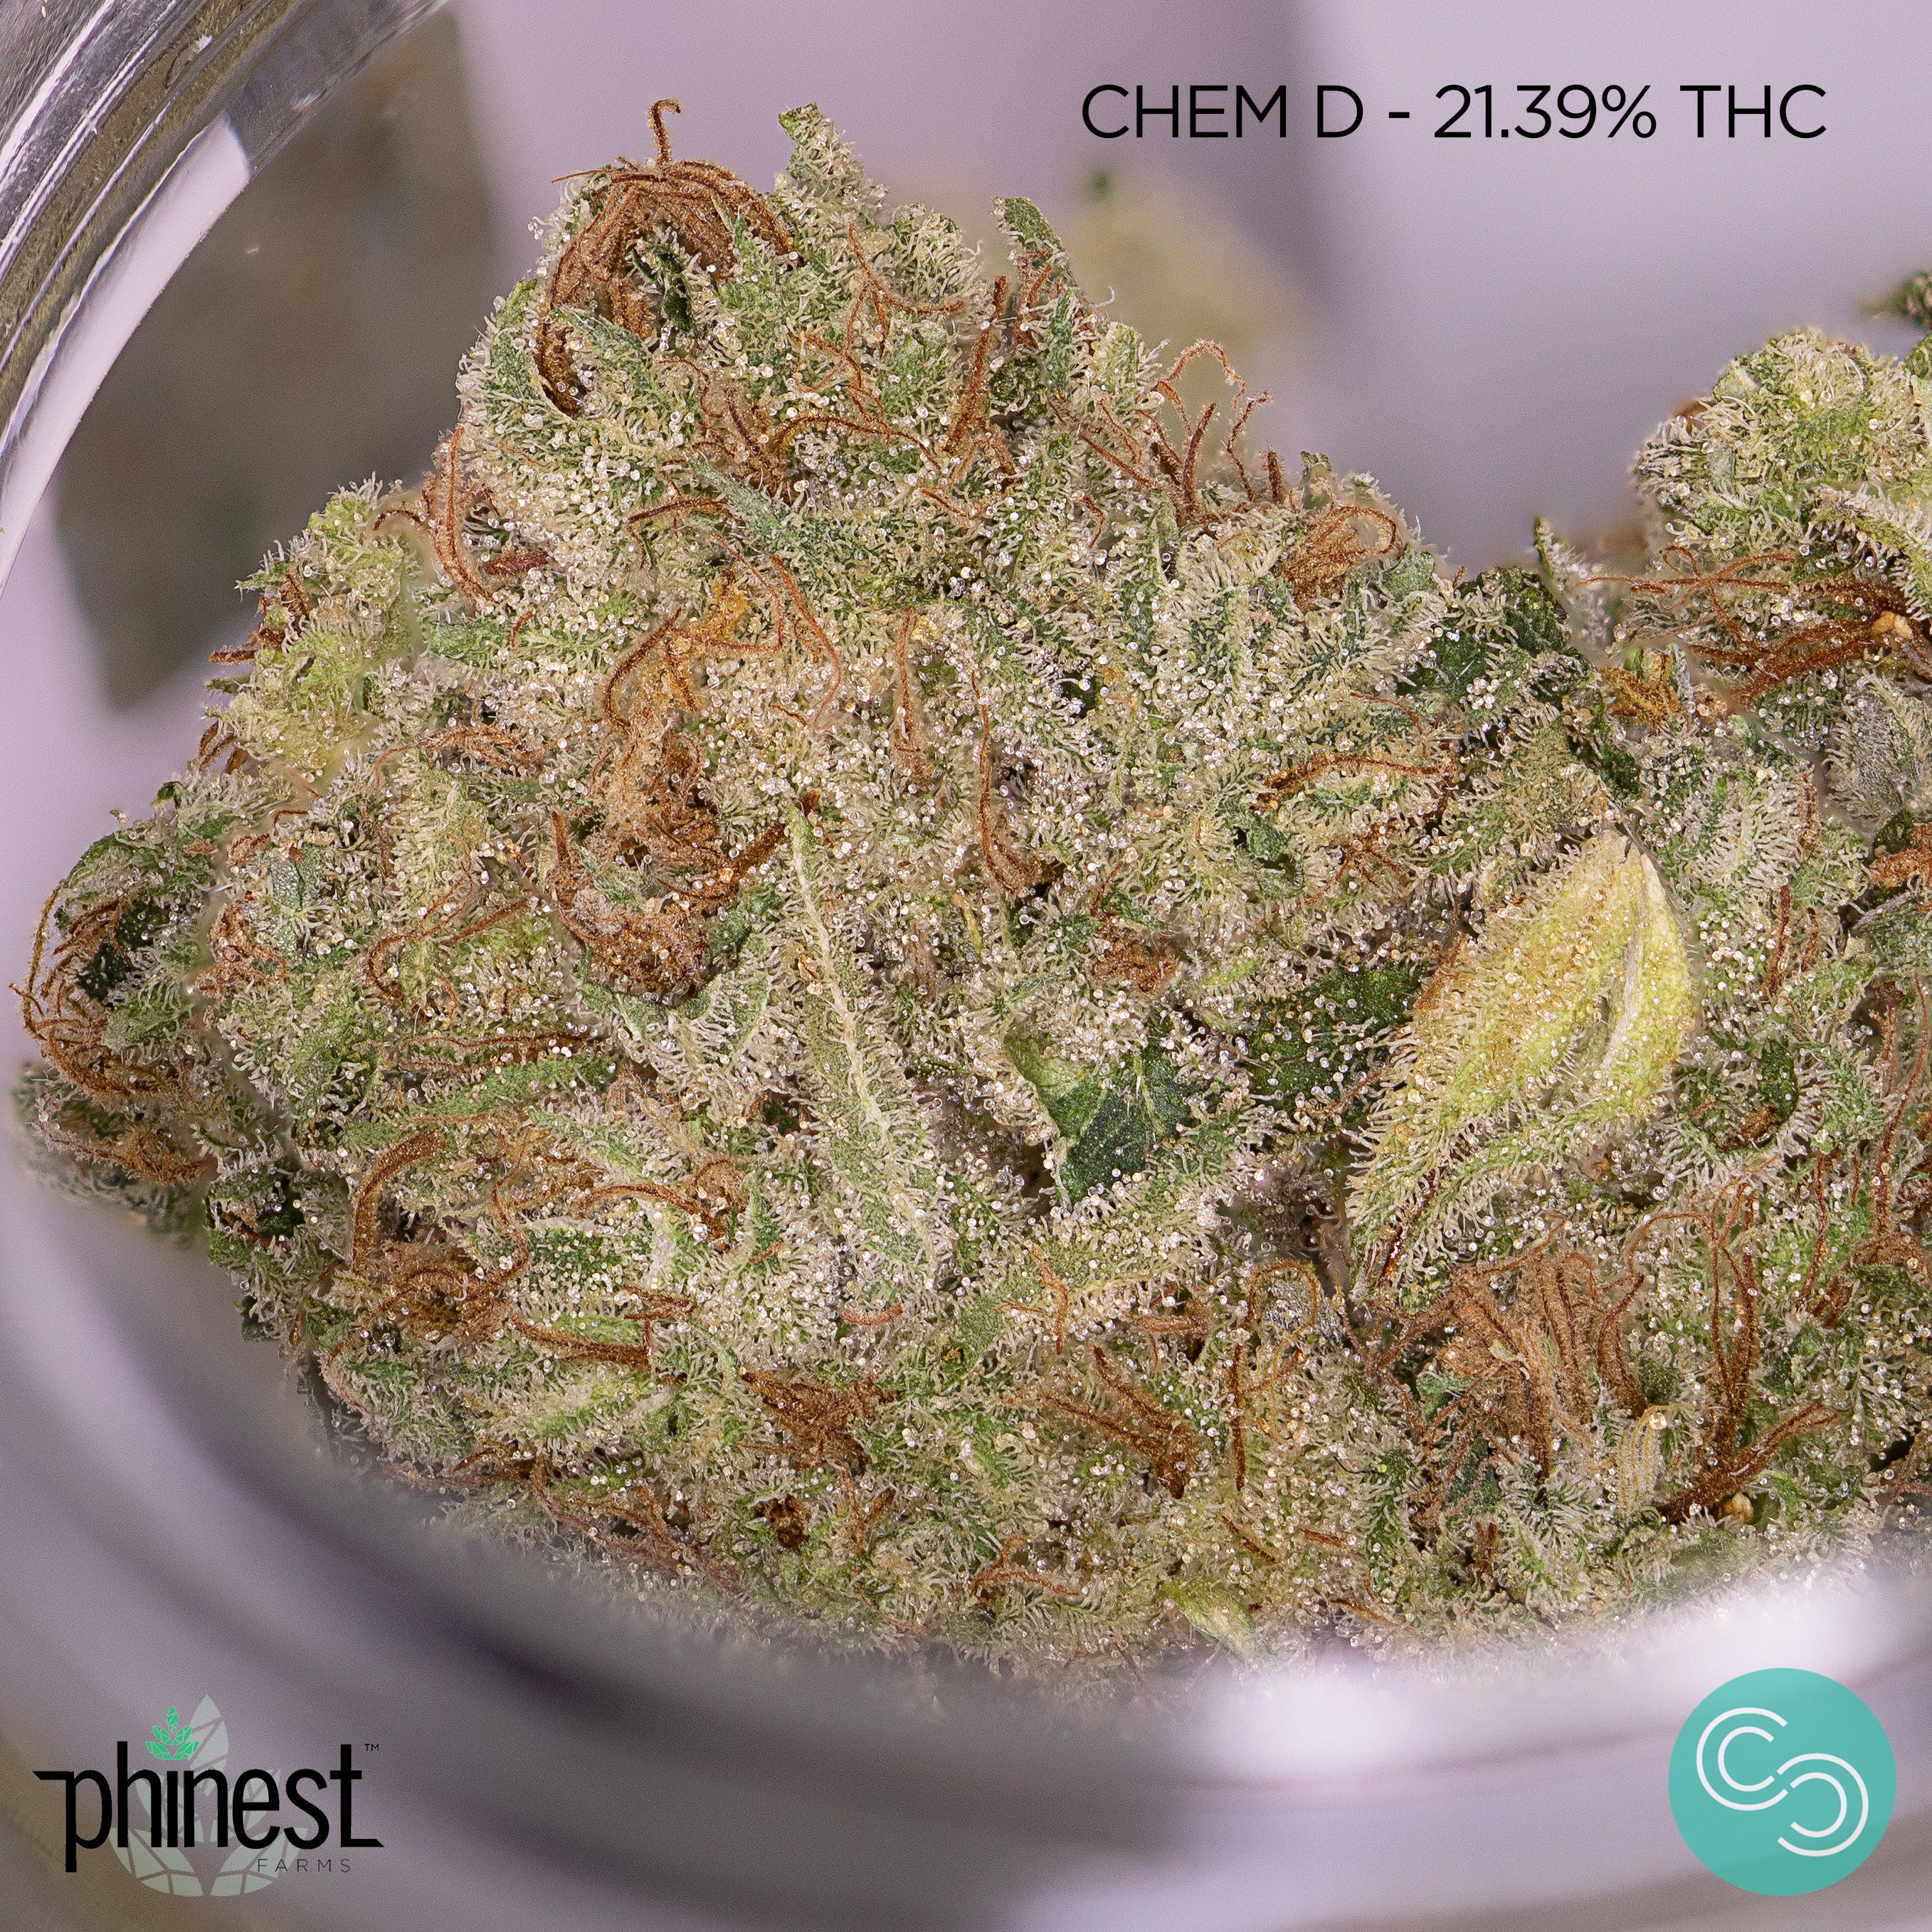 Phinest - Chem D - 21.39% THC